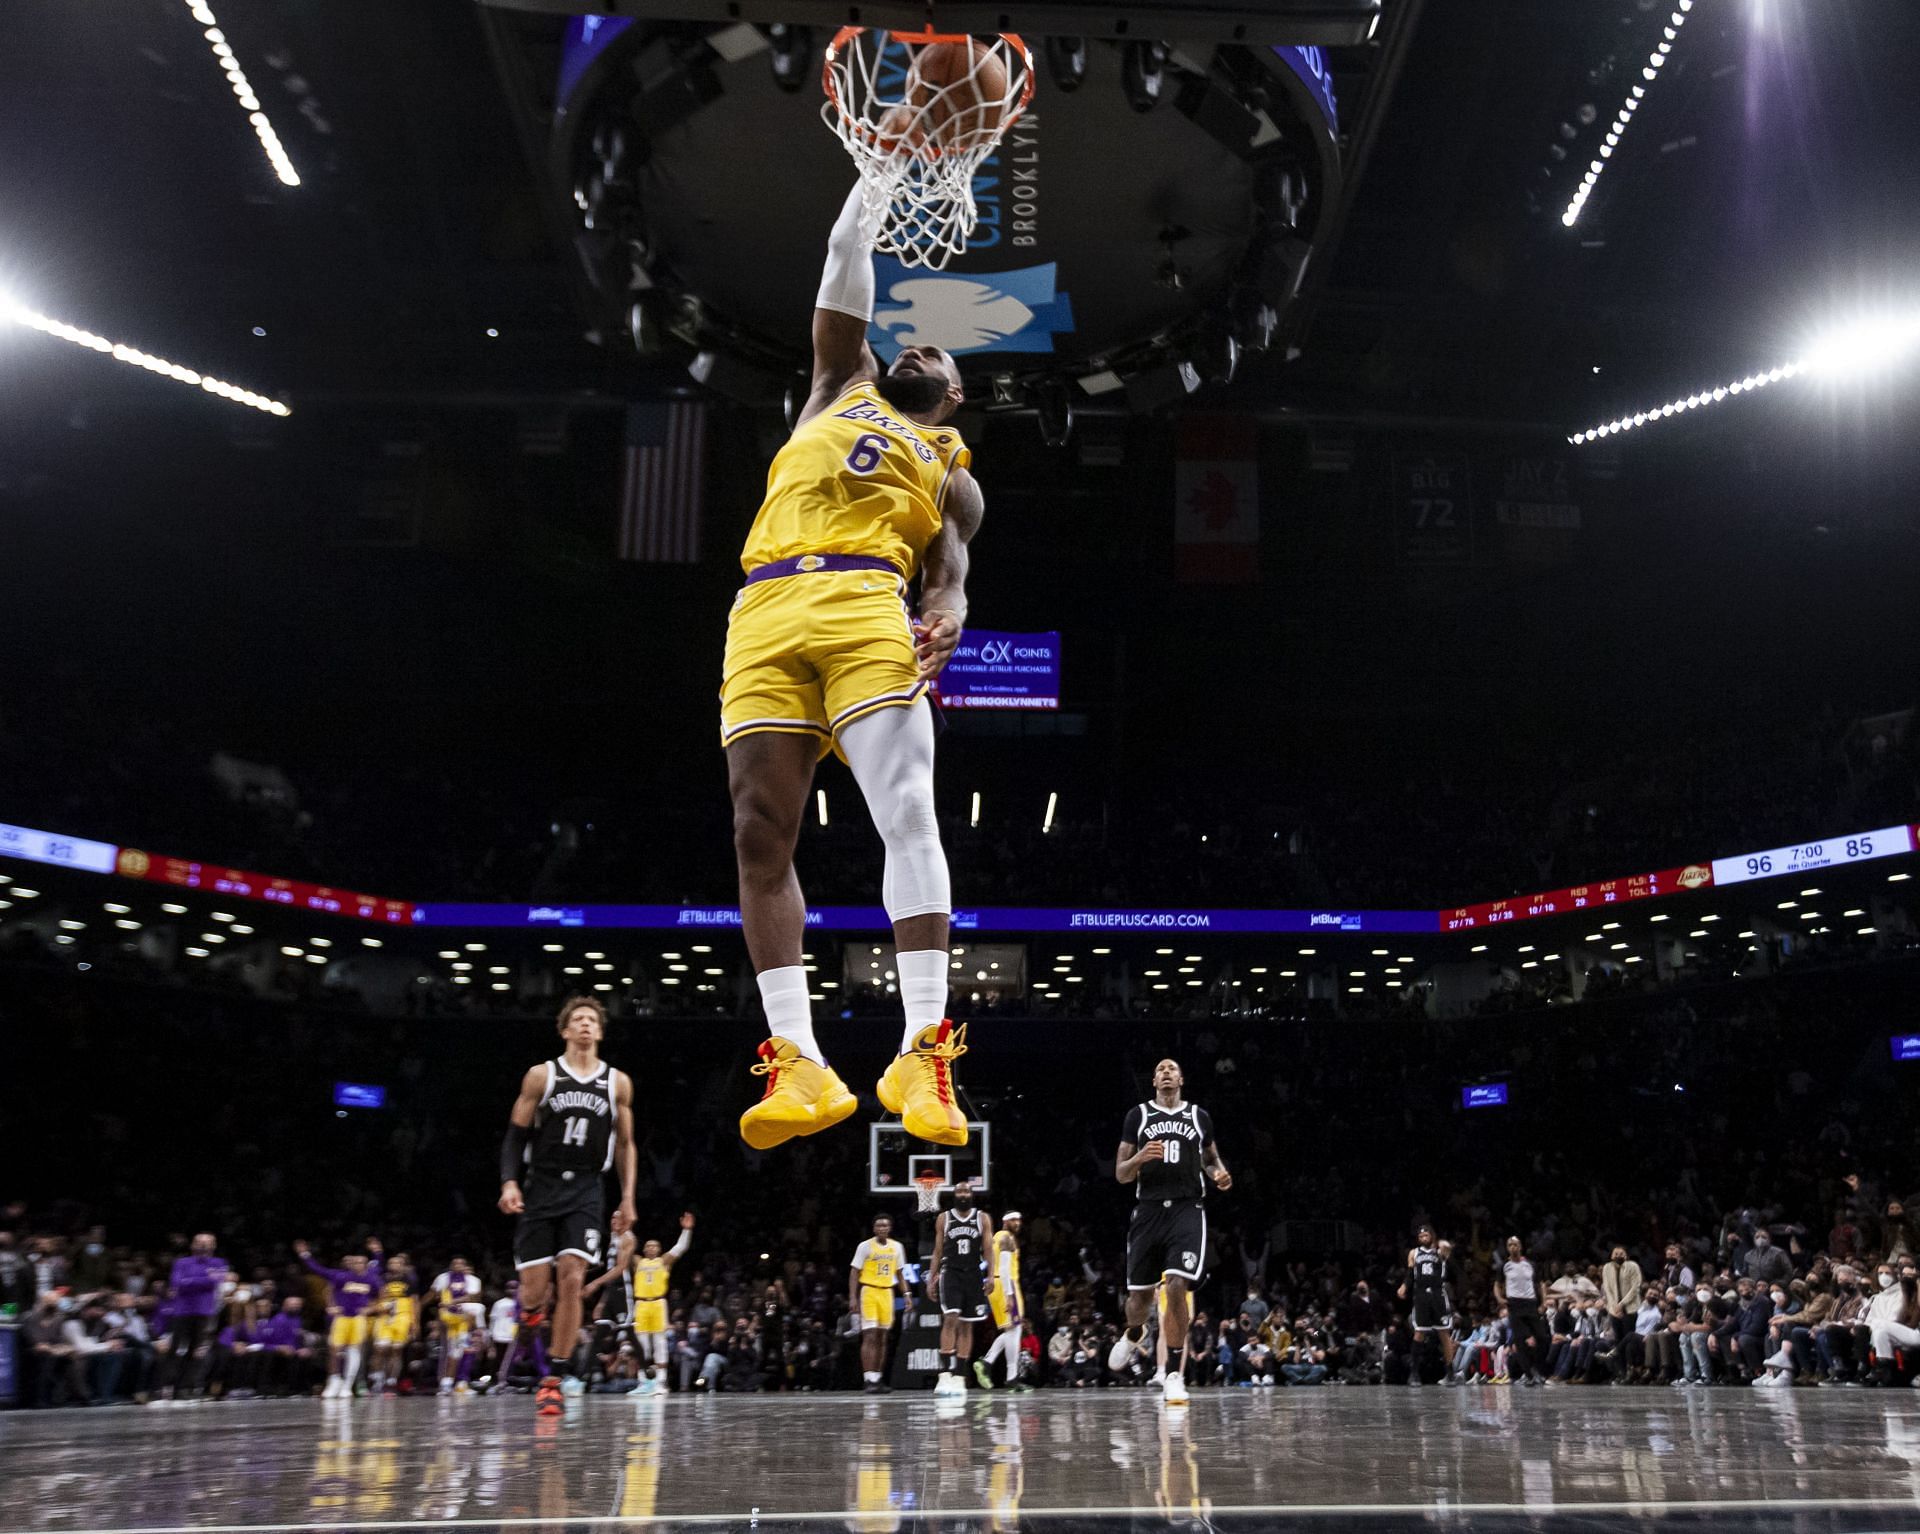 LA Lakers vs. Brooklyn Nets; LeBron James dunks on the Brooklyn Nets